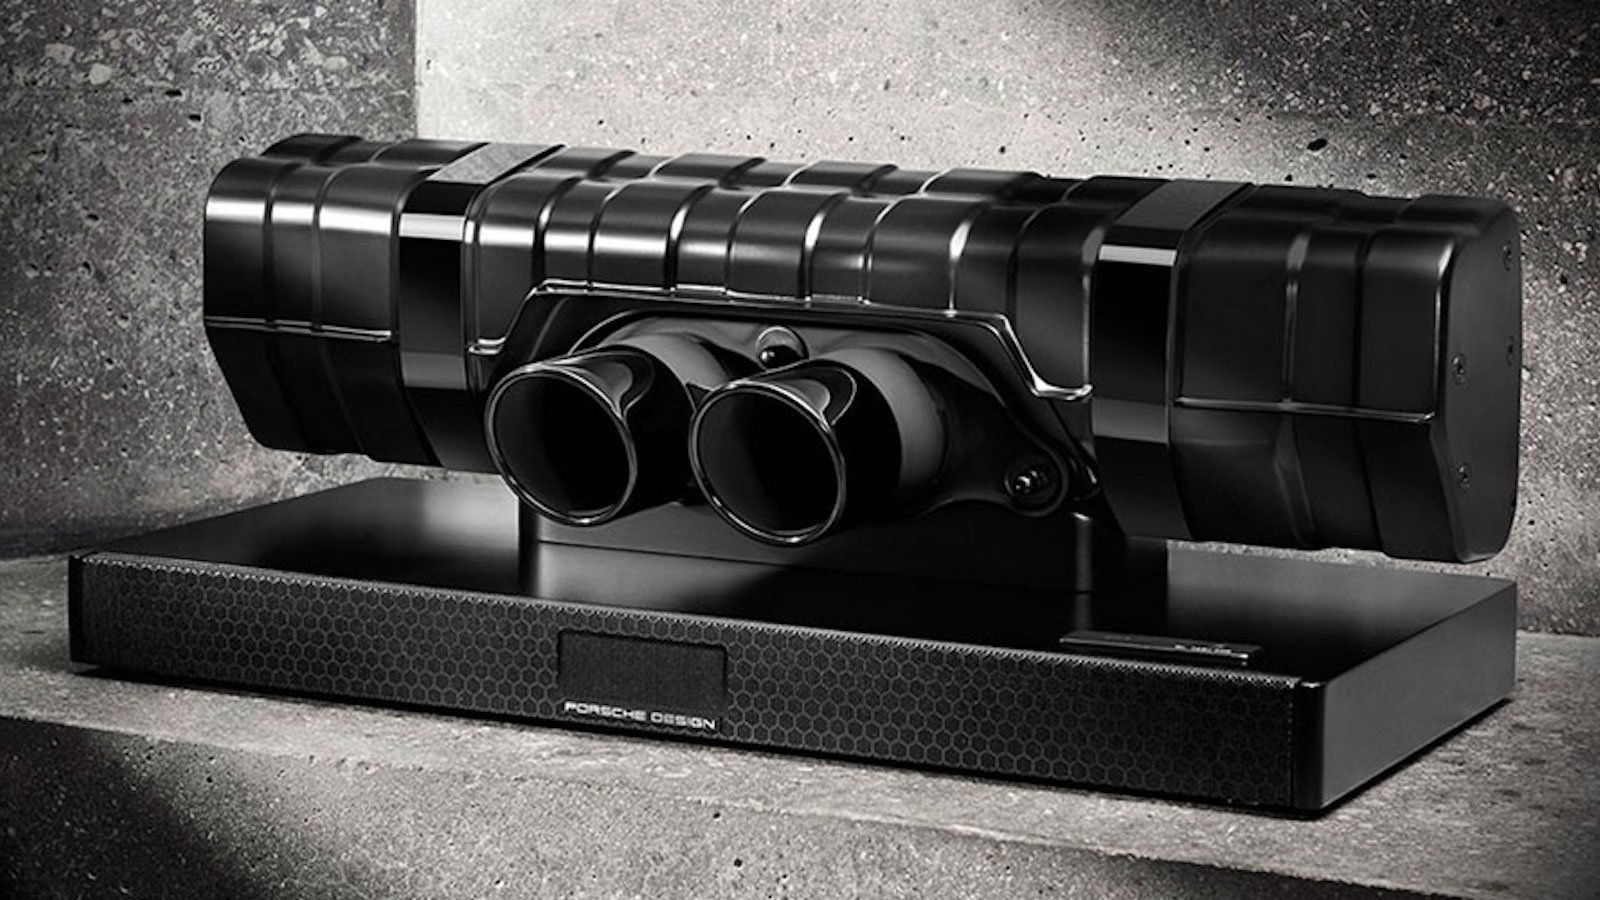 Porsche Design 911 Soundbar Black Edition Breathtaking Speaker has shiny black elements